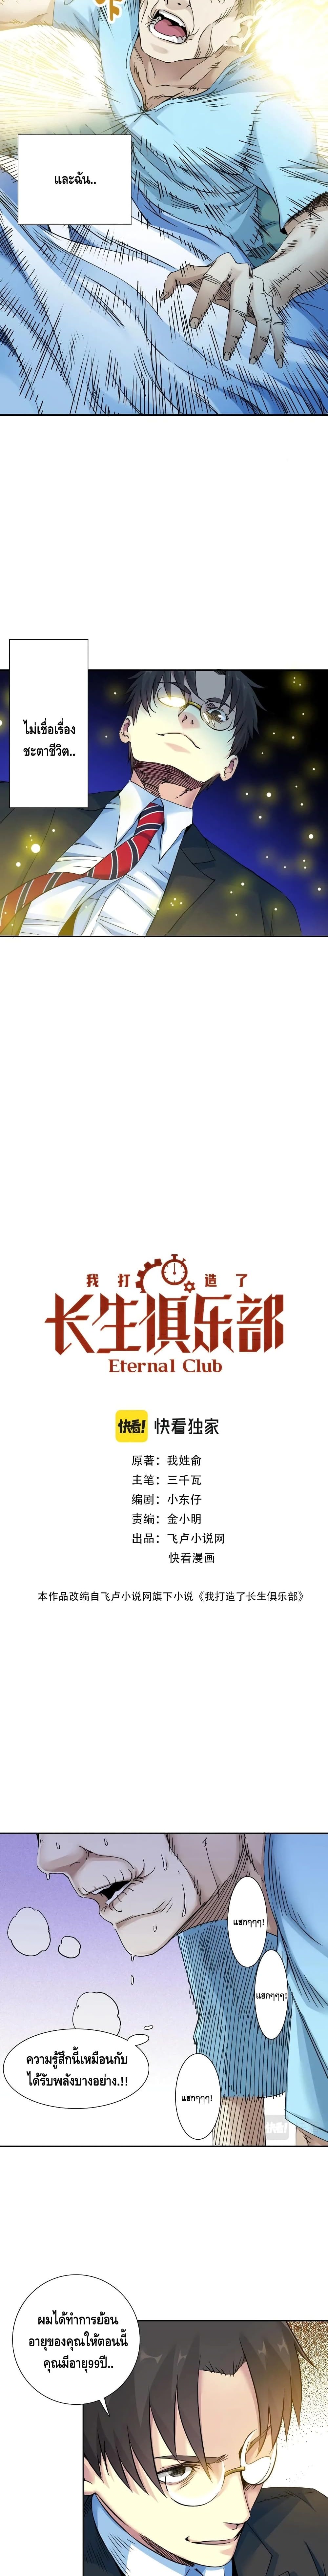 The Eternal Club31 (4)